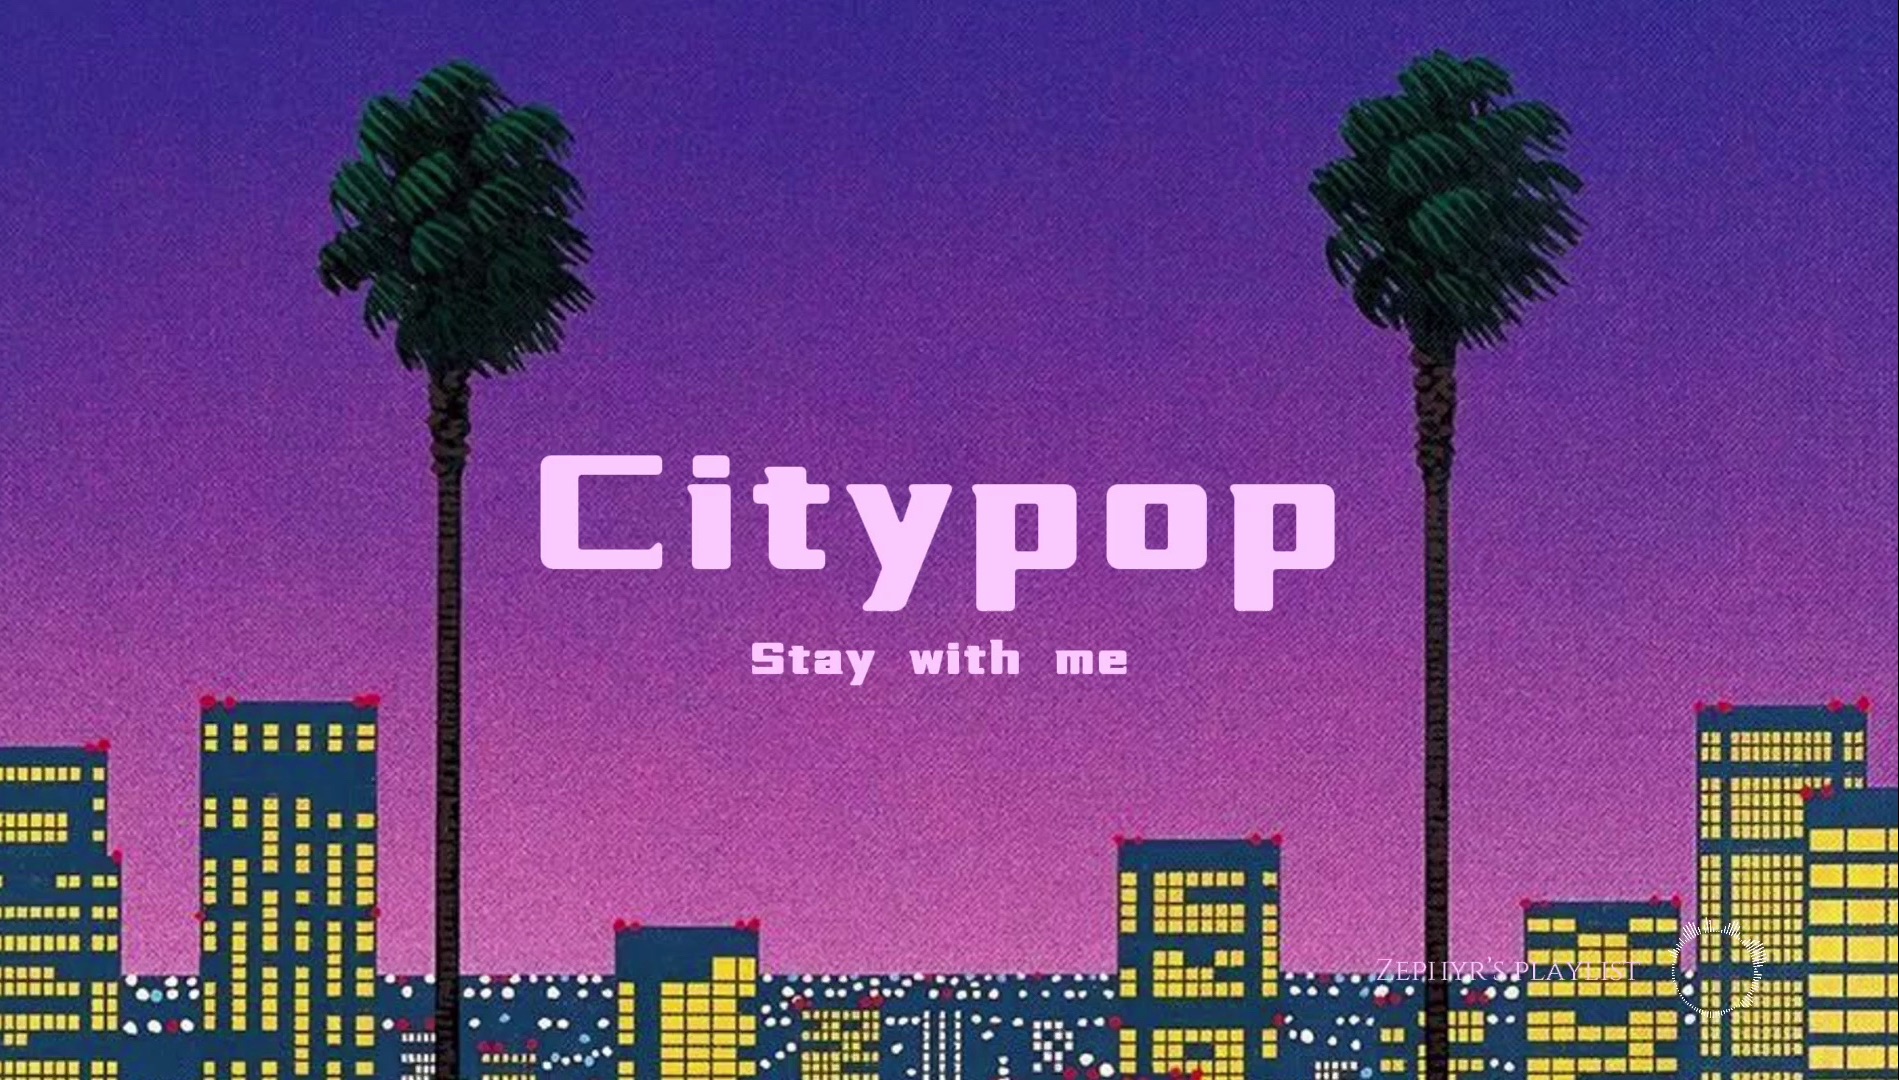 Playlist· 复古浪潮🎆漫游Citypop的迷幻世界 穿梭于变换的霓虹灯间｜适合通勤/跳舞/放松/学习/工作氛围感小众私藏英文歌单🎶